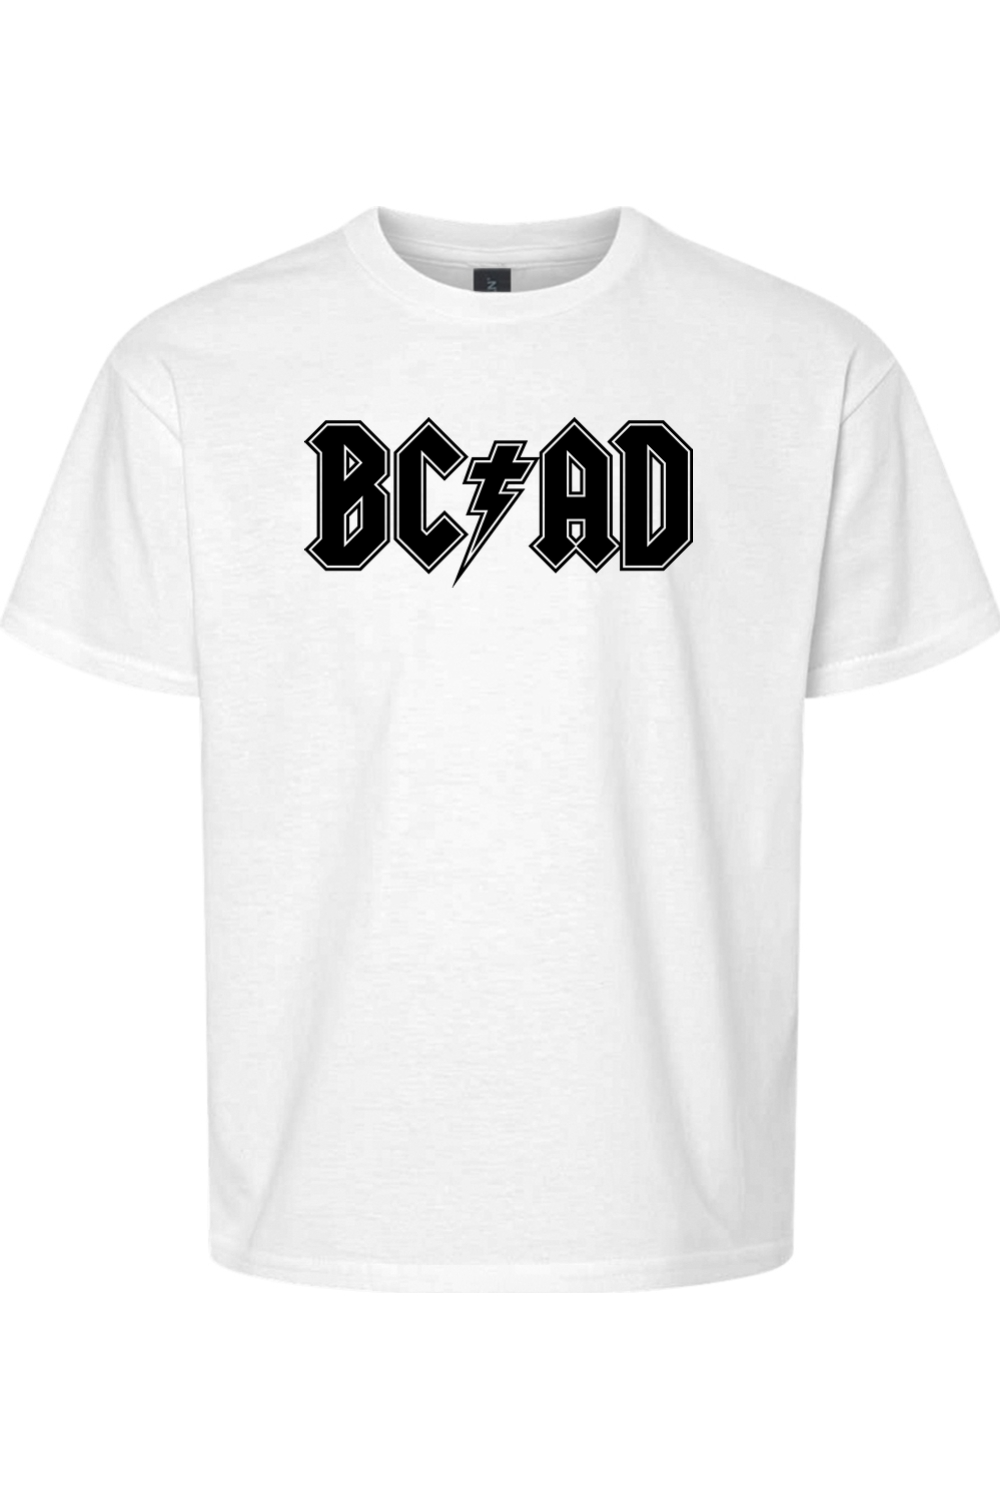 BCAD T-Shirt - youth